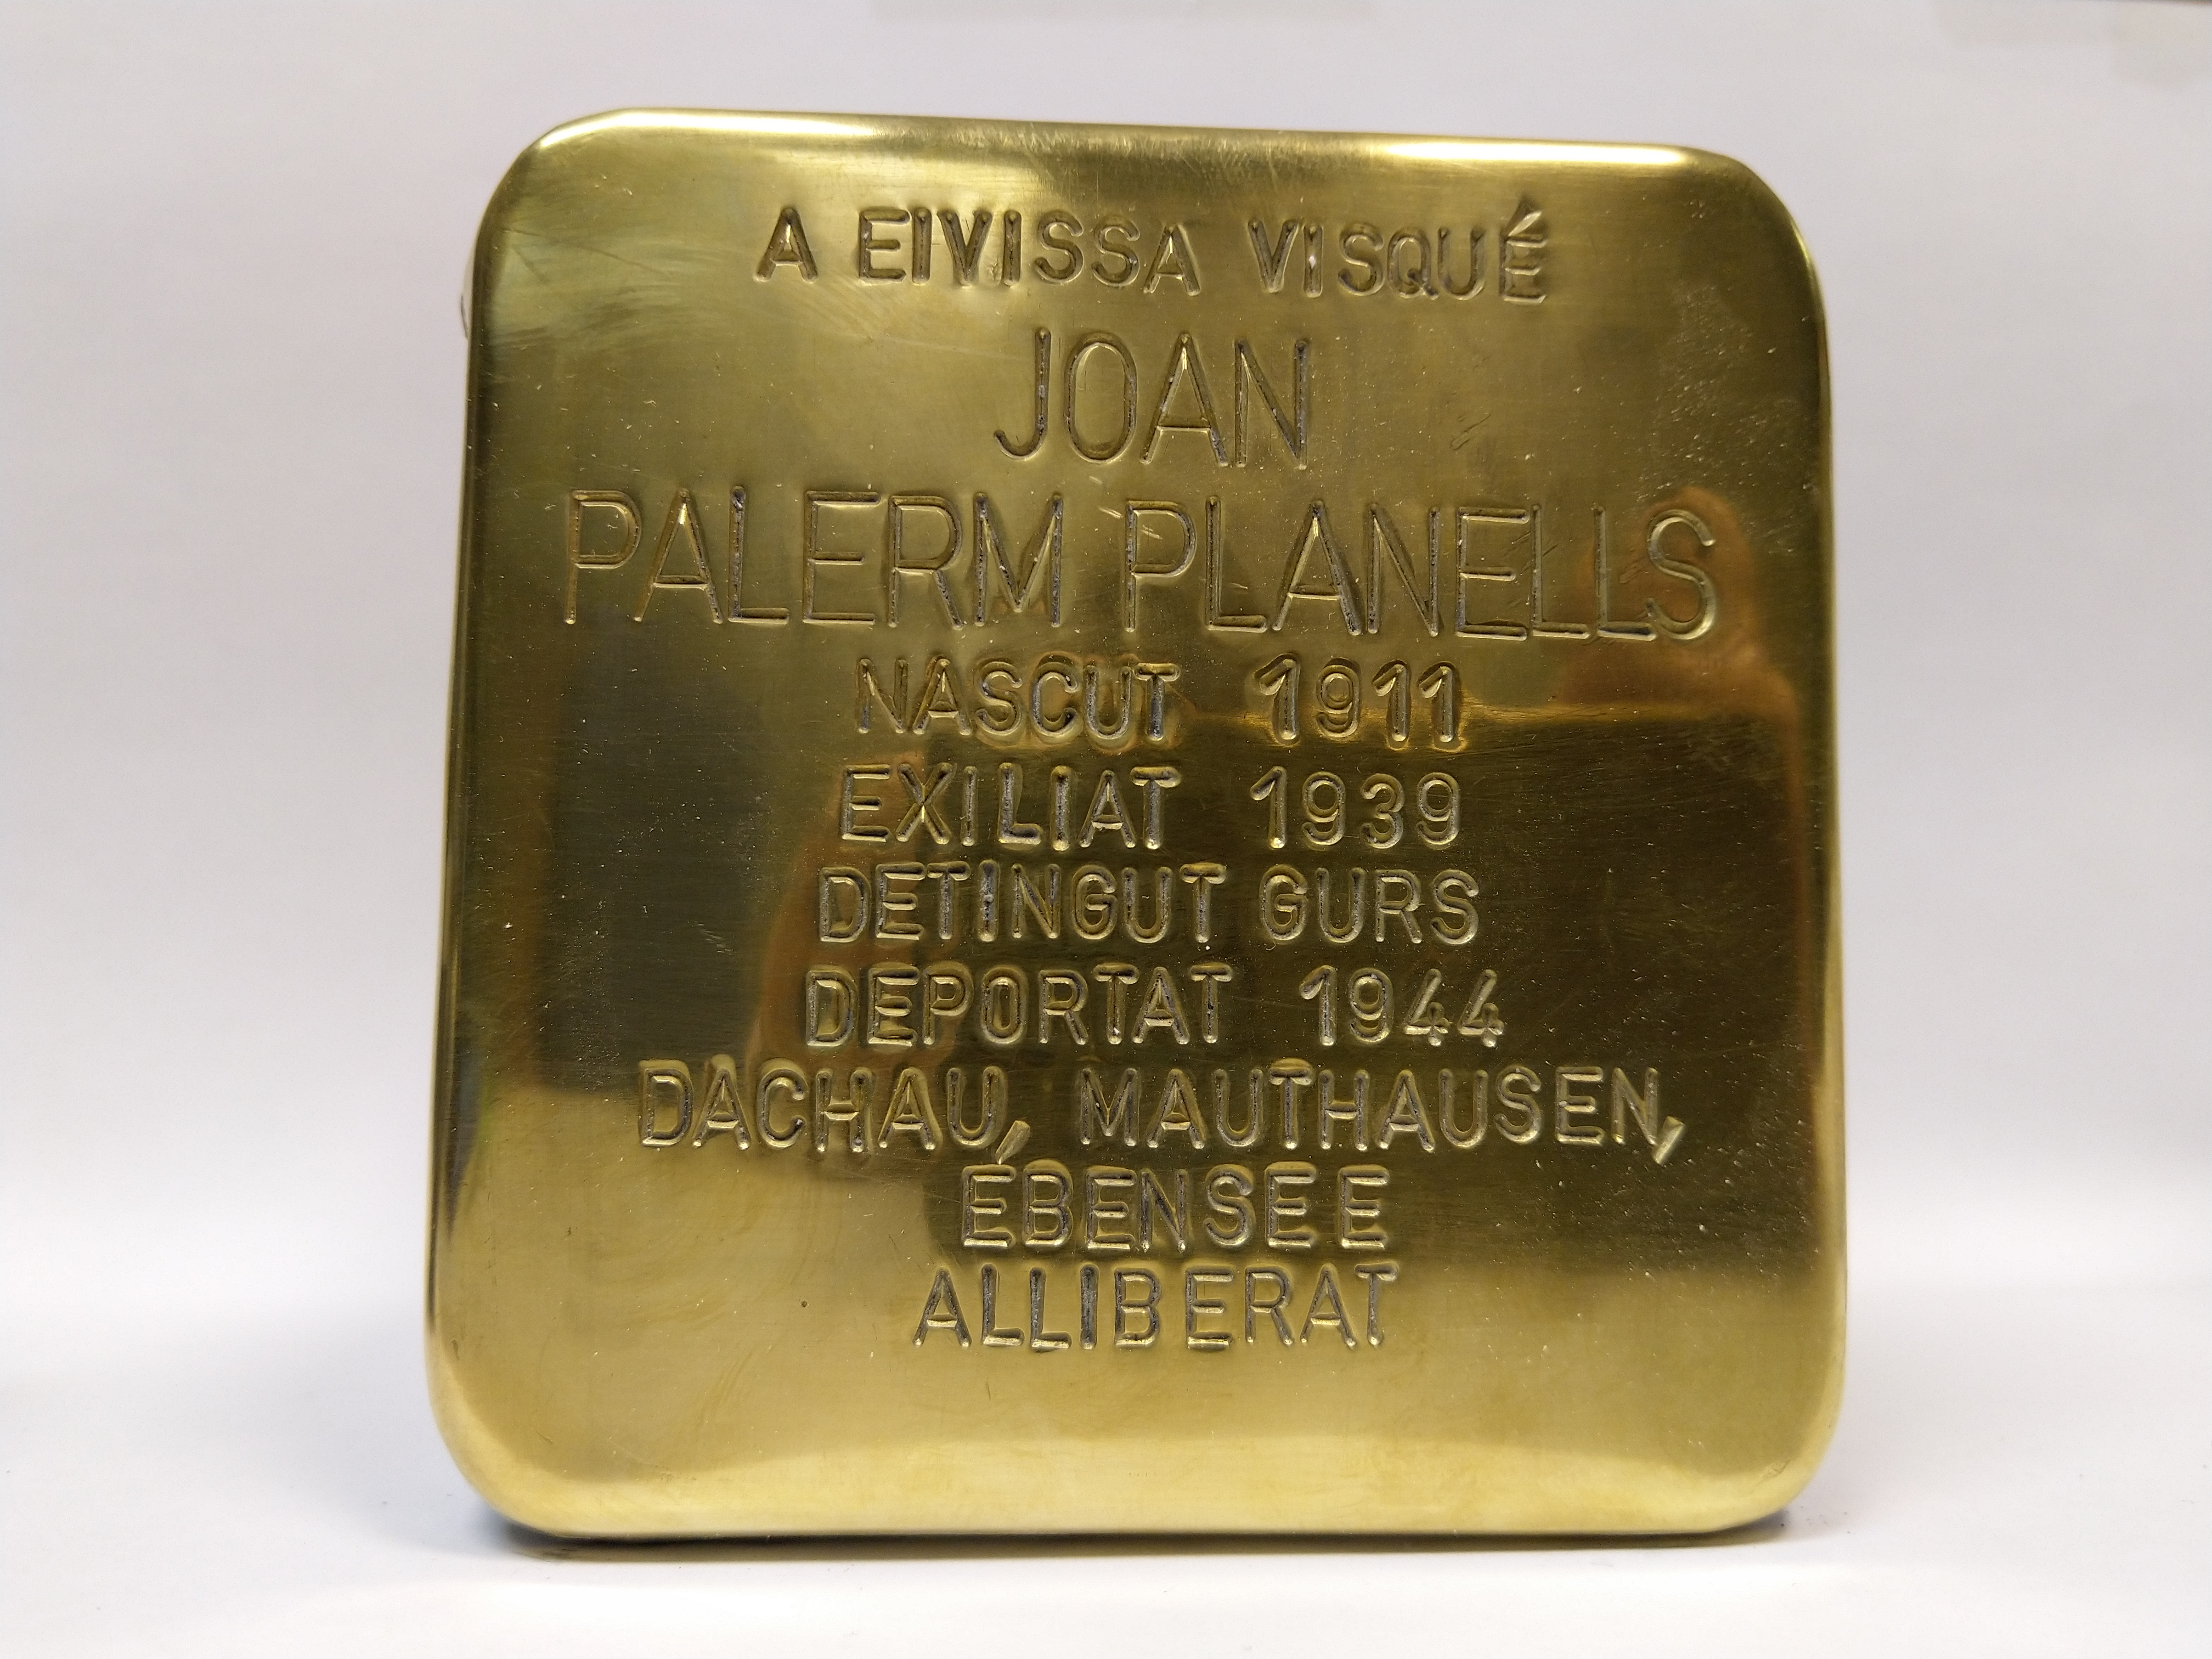 Joan Palerm Planells